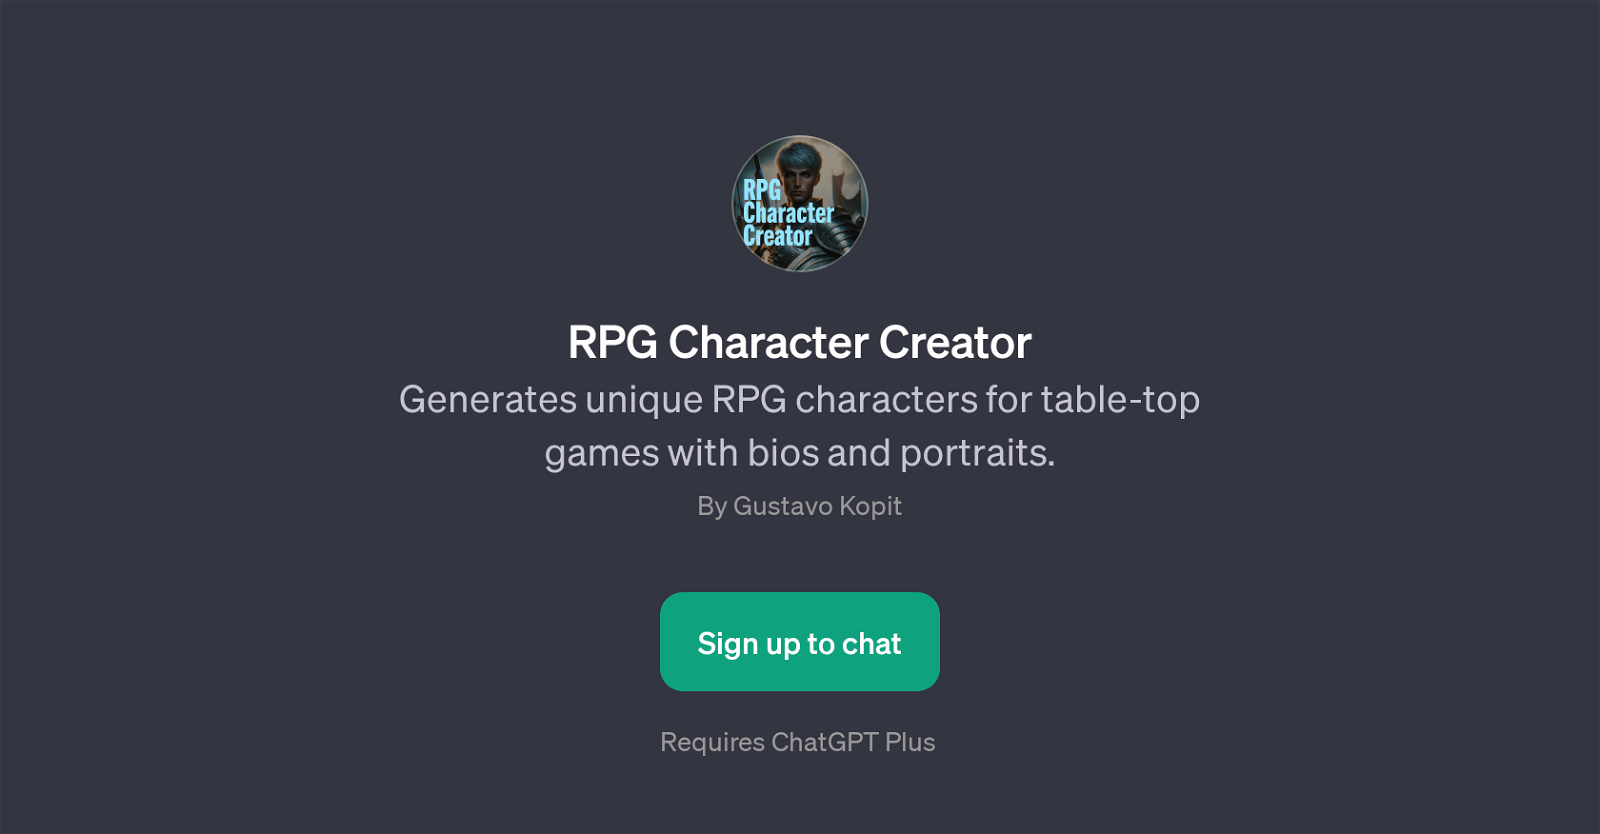 RPG Character Creator website